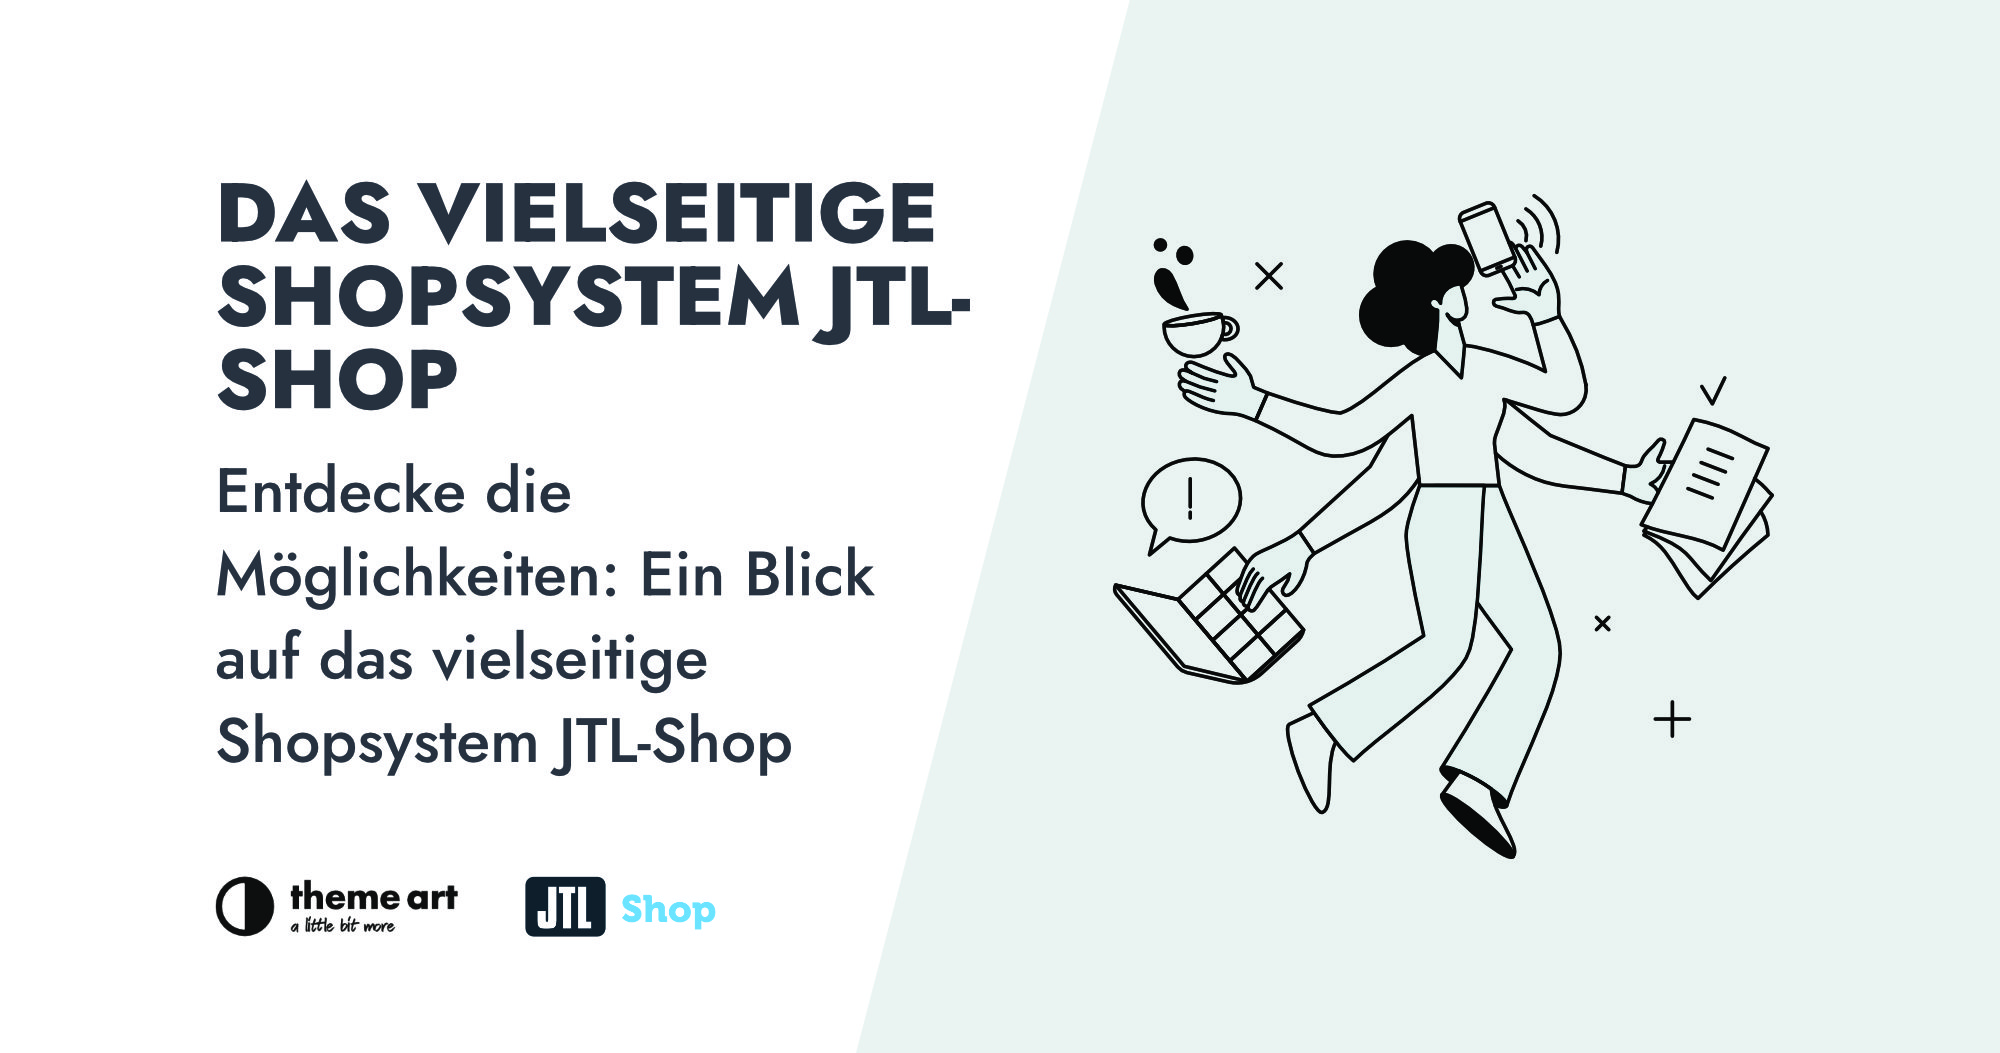 Das vielseitige Shopsystem JTL-Shop